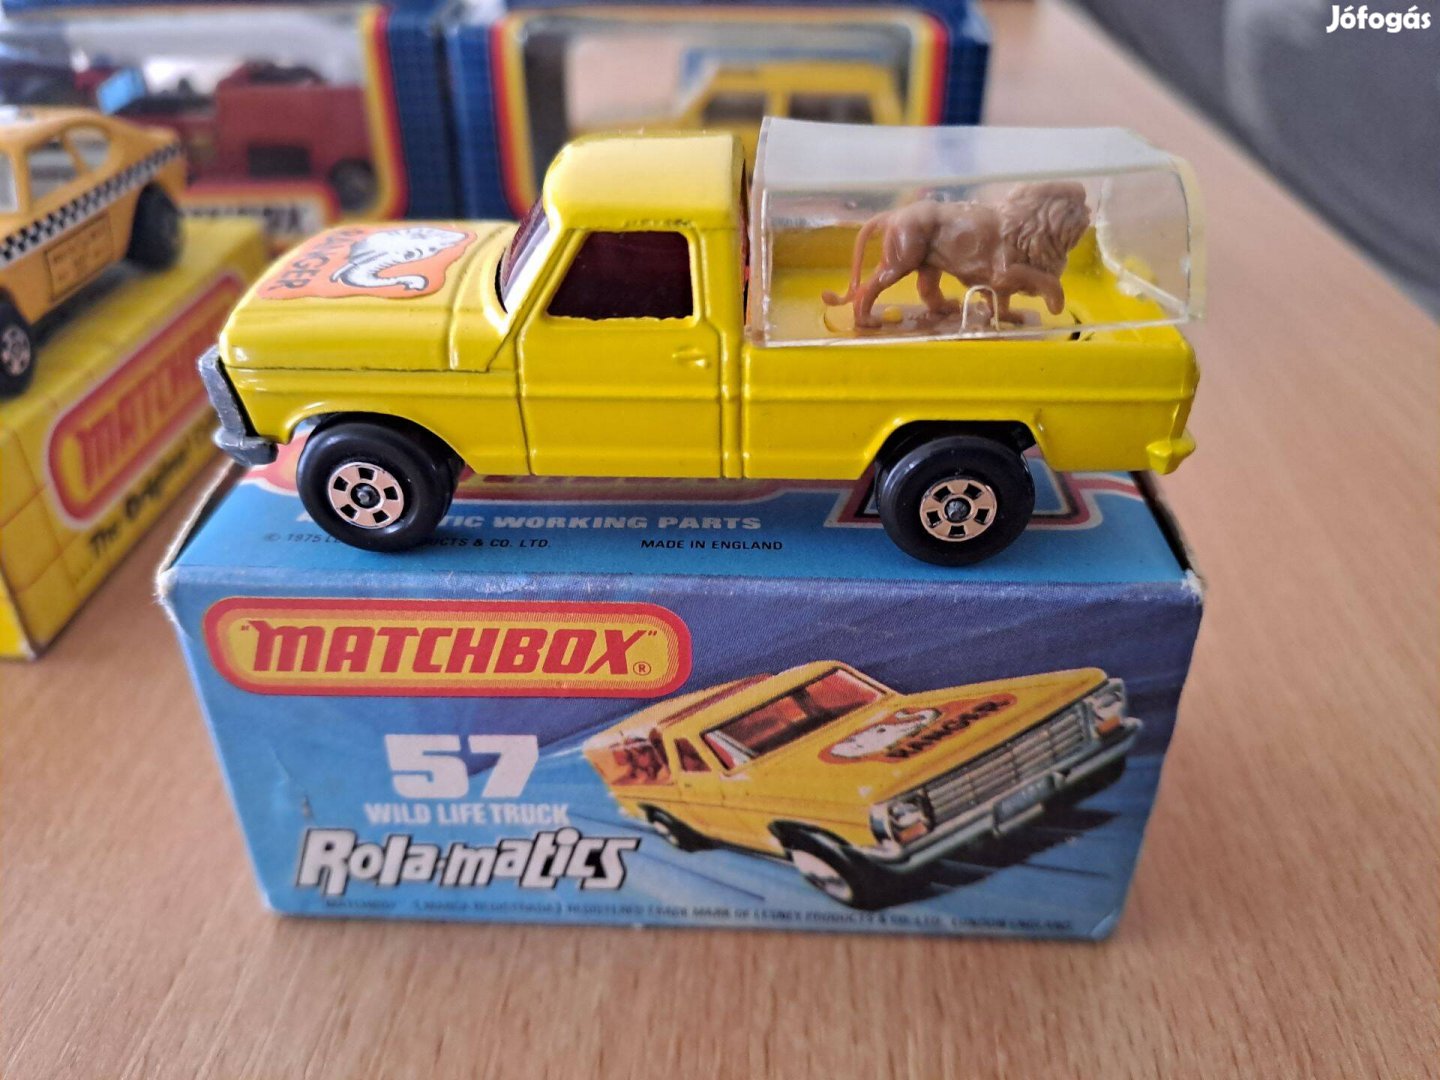 Matchbox 57 Wild Life Truck Made in England!